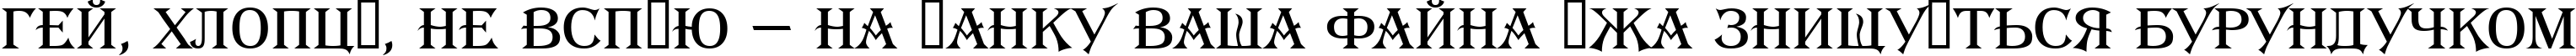 Пример написания шрифтом a_Algerius текста на украинском